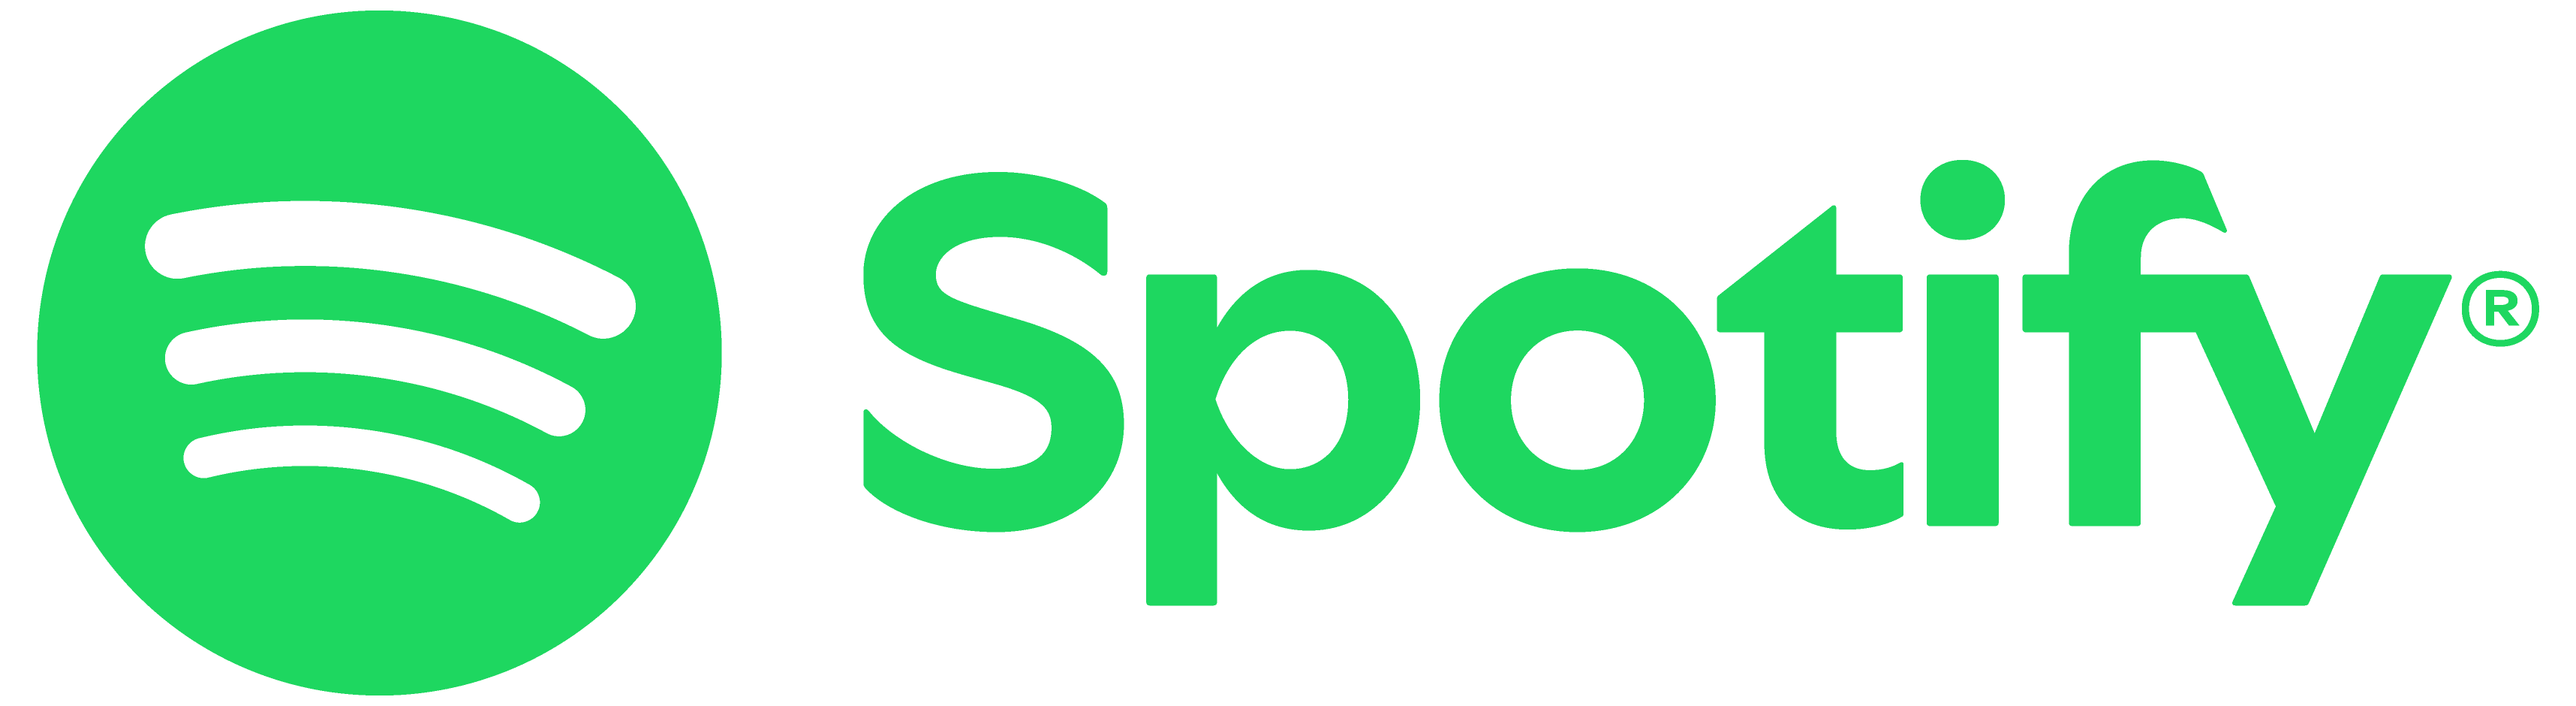 Spotify_Full_Logo_RGB_Green.png